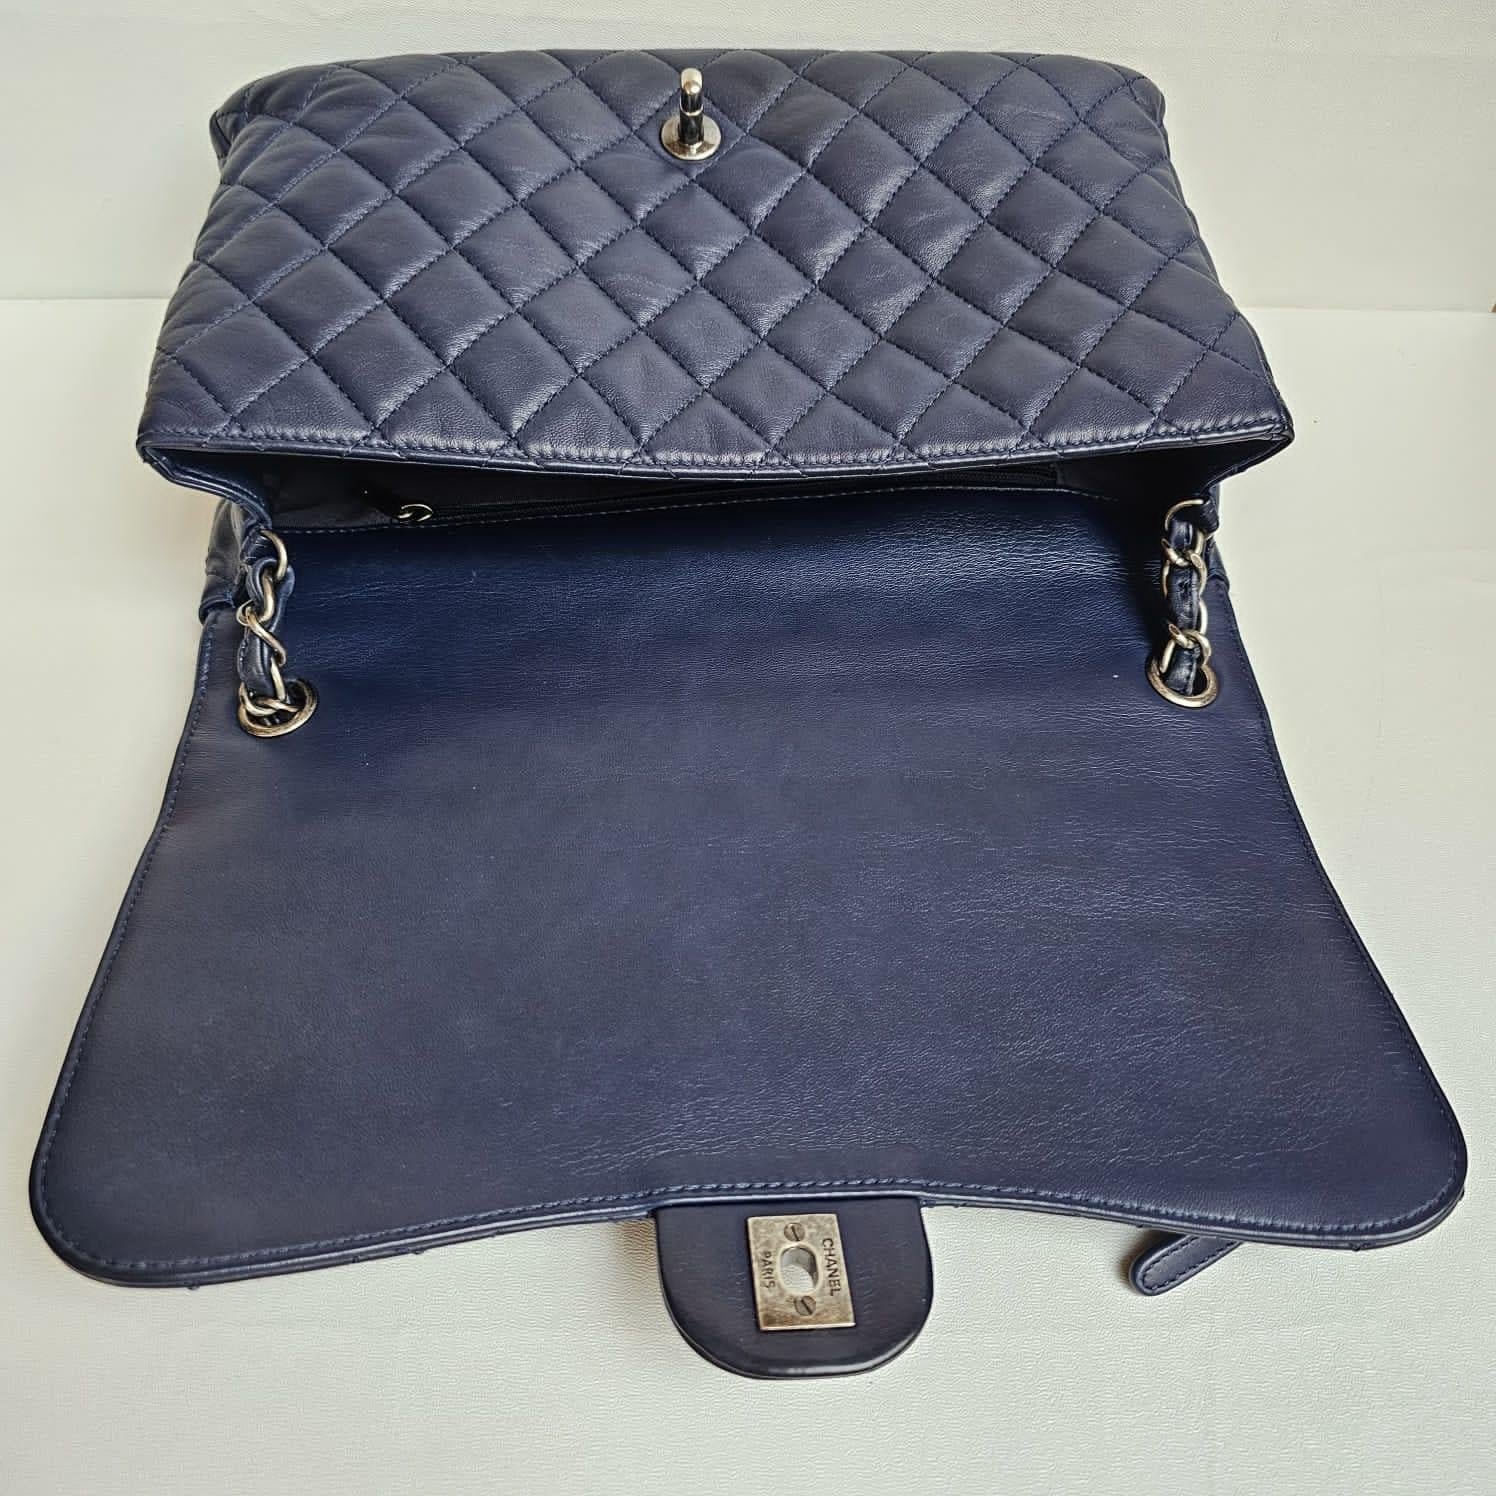 Chanel 2016 Navy Jumbo Calfskin Quilted Zip Flap Shoulder Bag For Sale 9